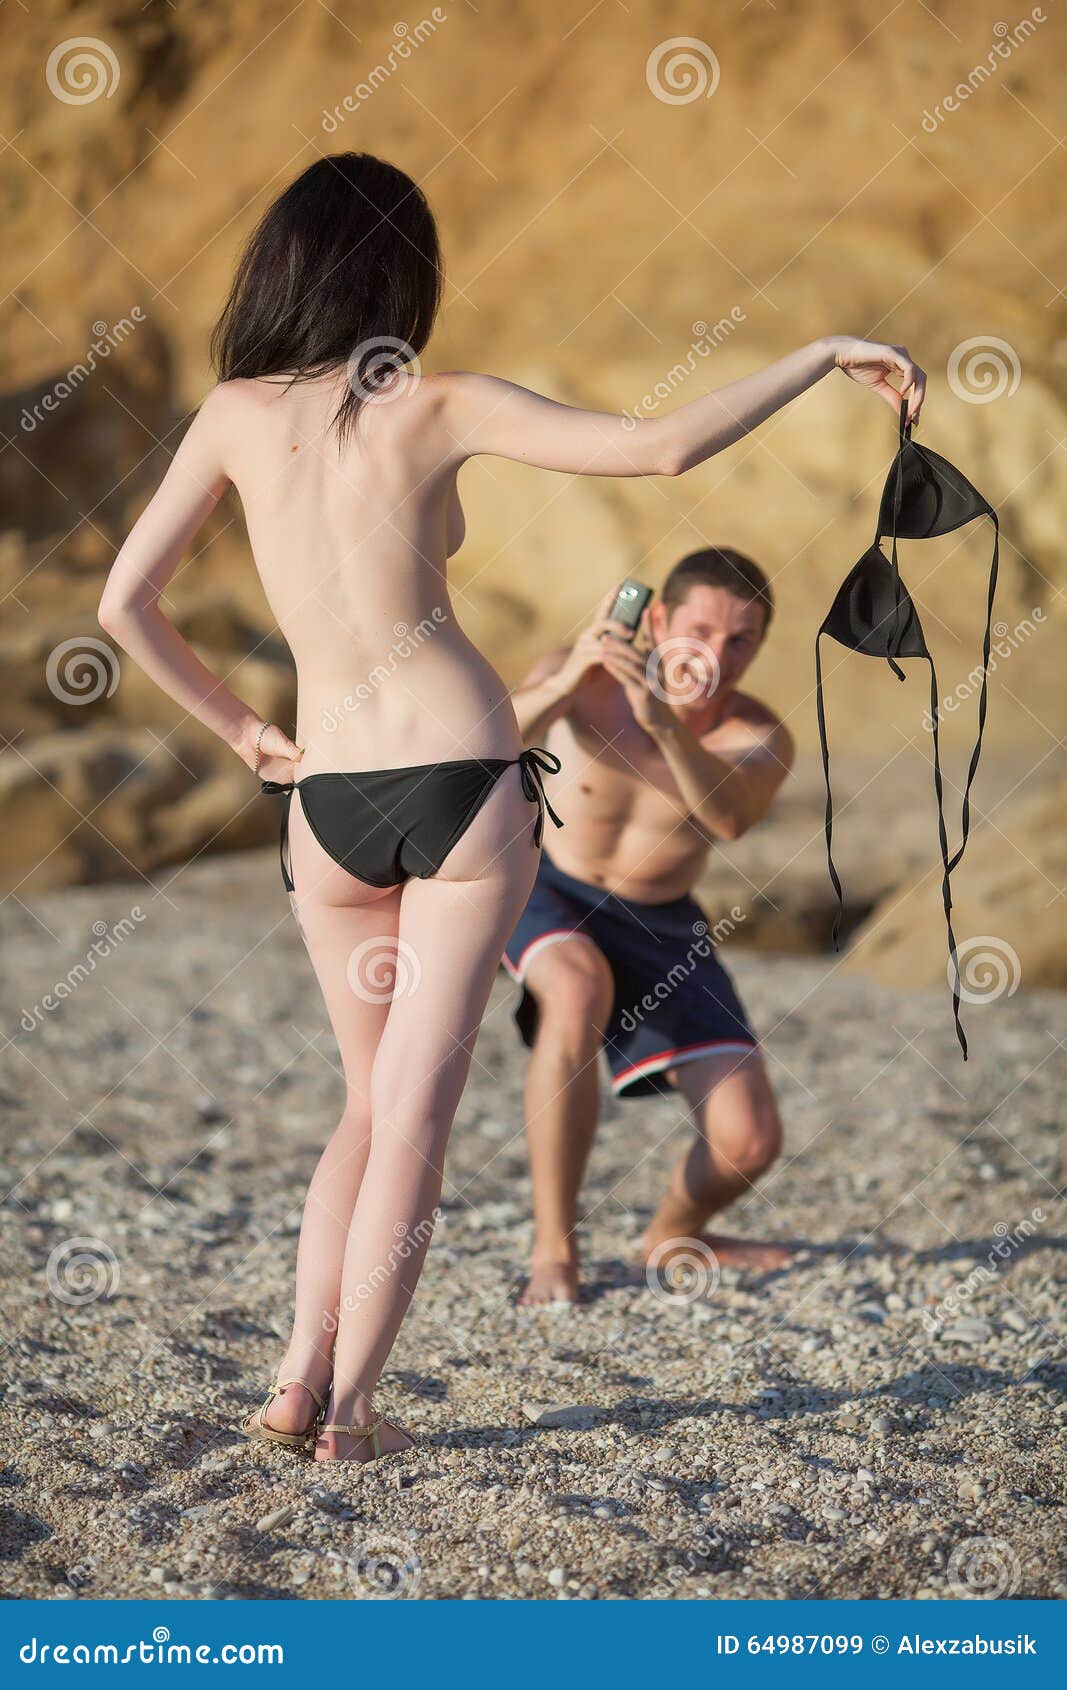 amateur couple nude holiday Fucking Pics Hq